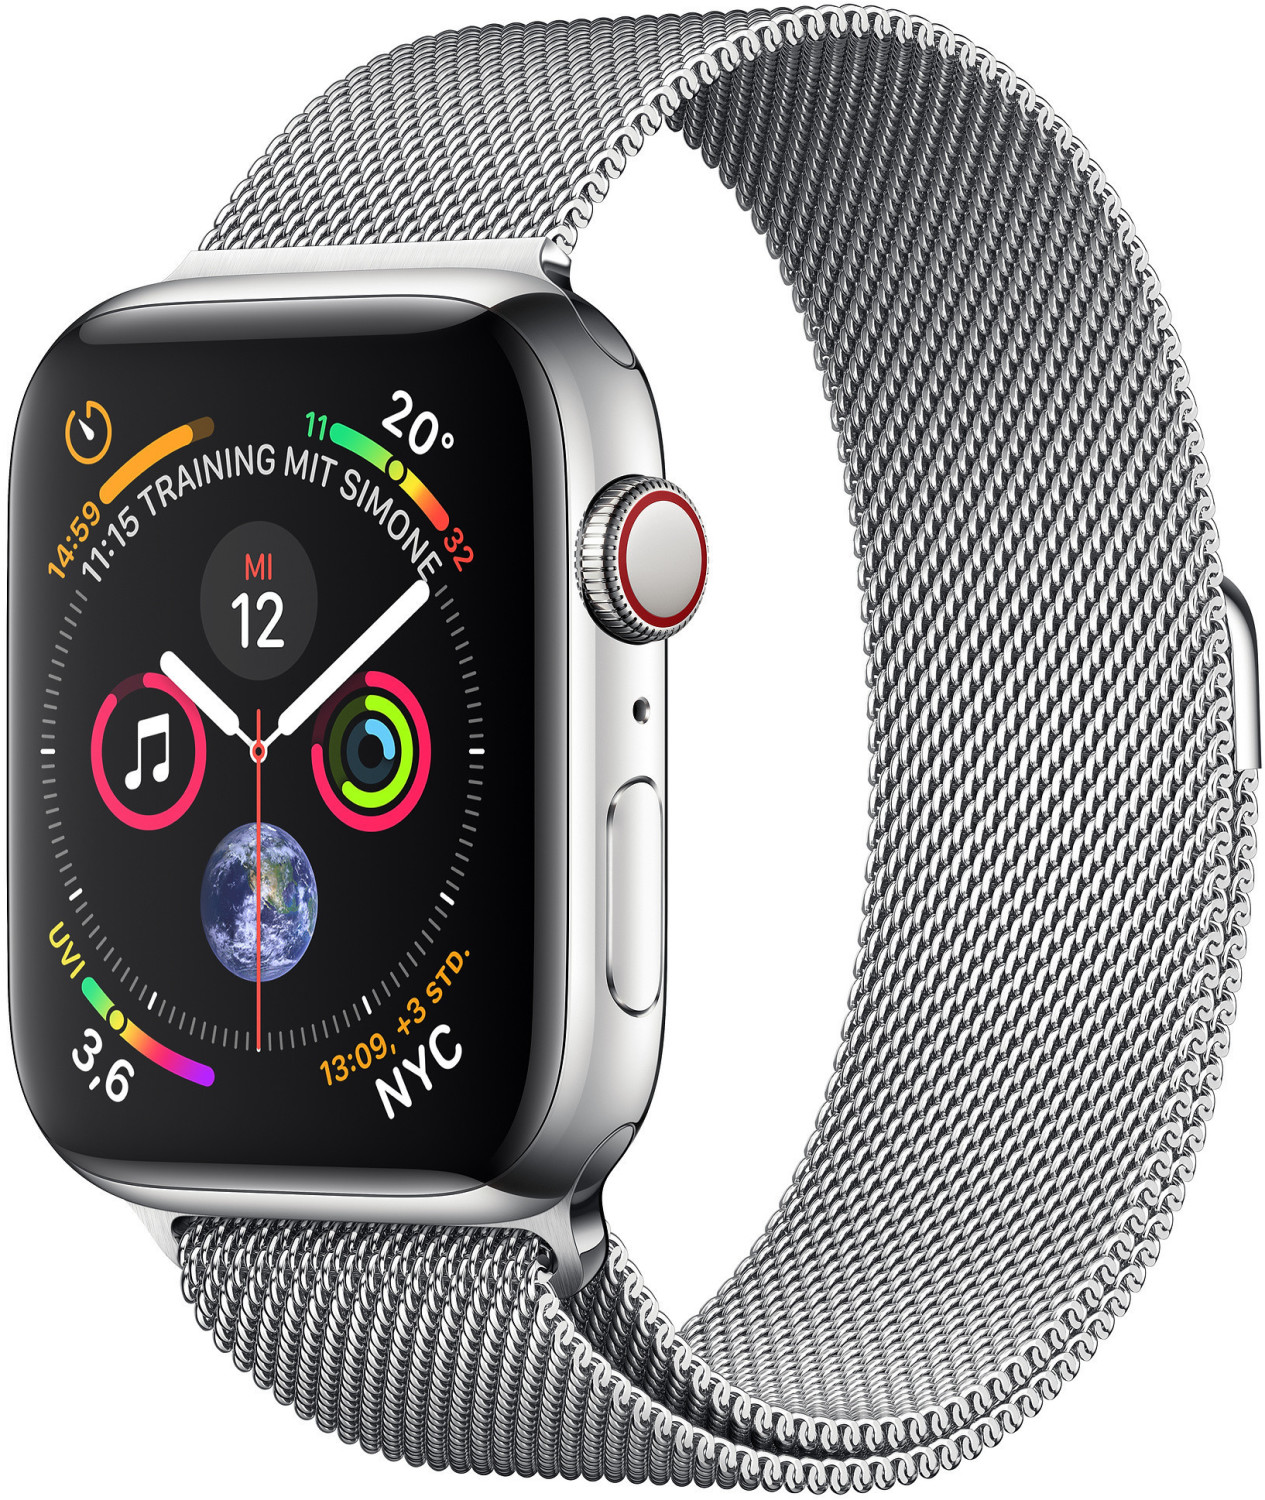 Buy Apple Watch Series 4 GPS + Cellular 40mm Silver Stainless Steel Is The Apple Watch Stainless Steel Worth It